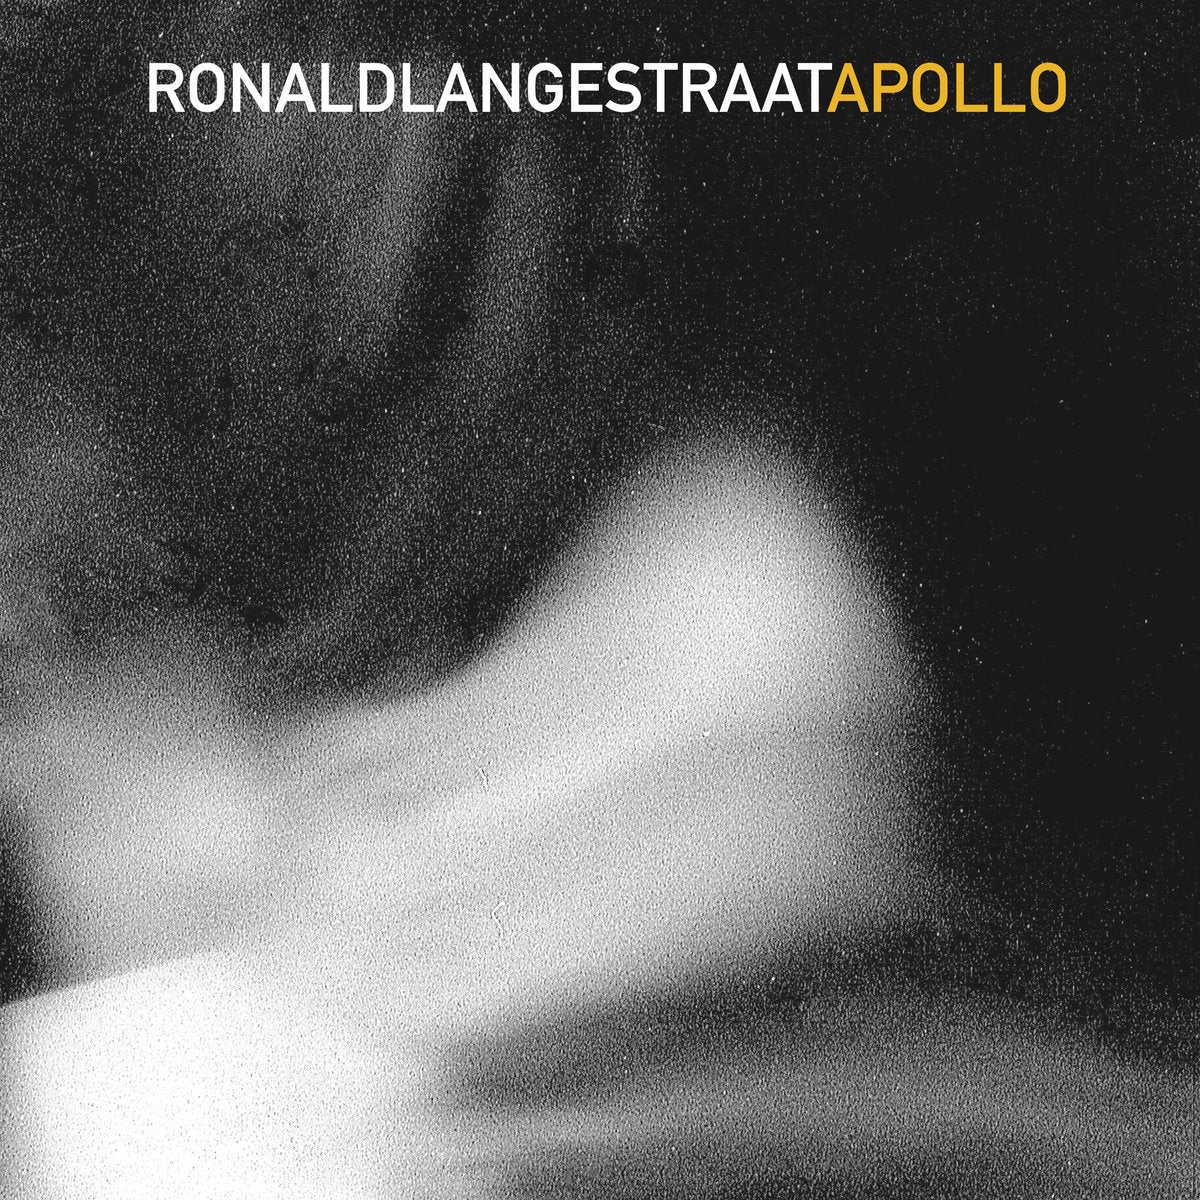 Ronald Langestraat – Apollo